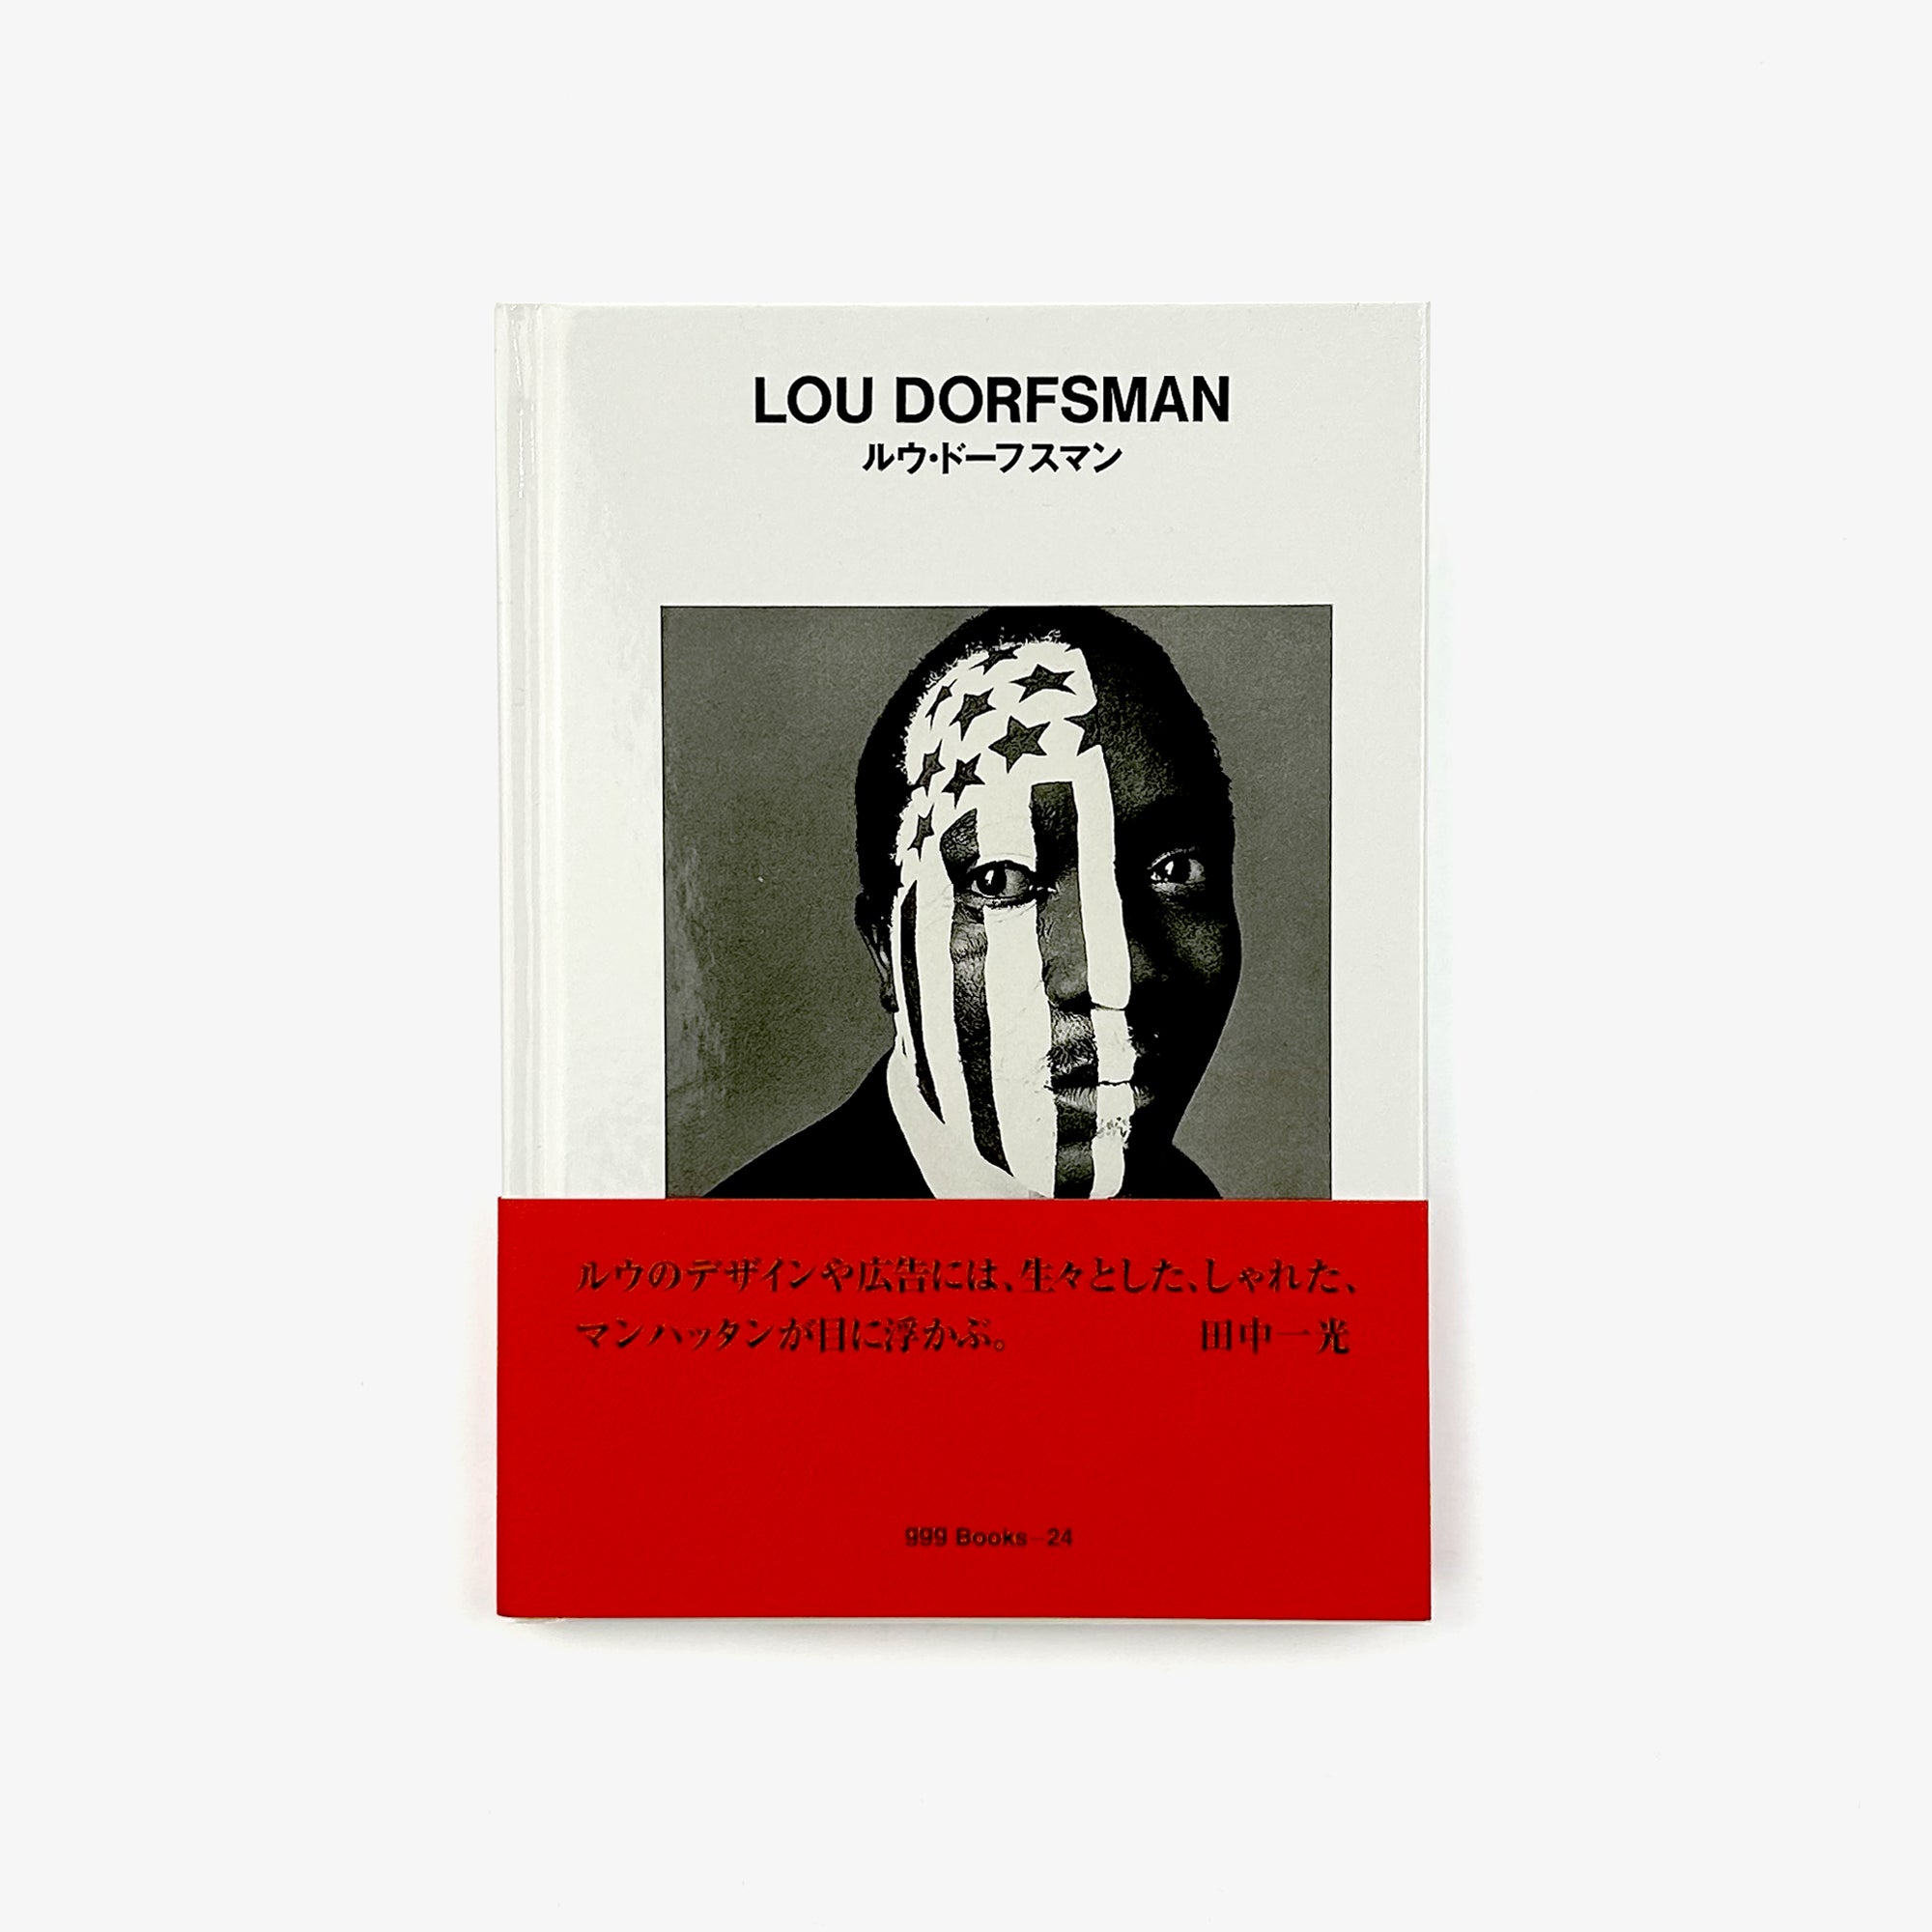 Lou Dorfsman: GGG Books 24